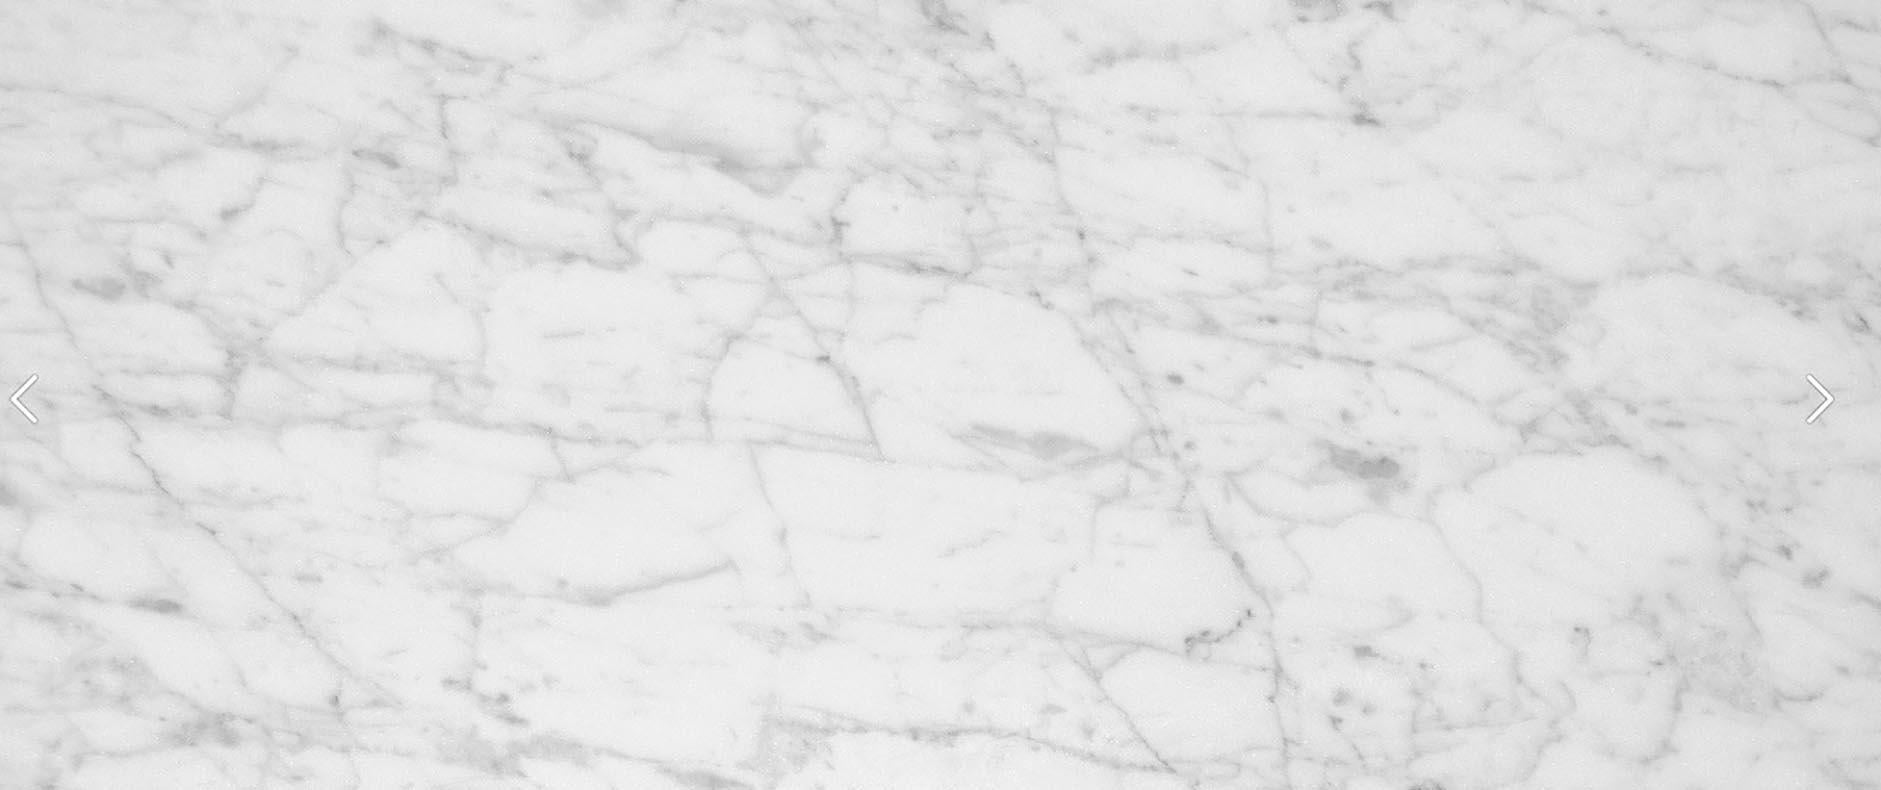 Nom : FOLDES INTARSIE
Table basse en marbre conçue par R. Littel
Taille : Cm 100 x 100 x 37.5H
MATERIAL : Pietra serena + Nero del Belgio + Bianco Carrara + Rosso Francia.
 